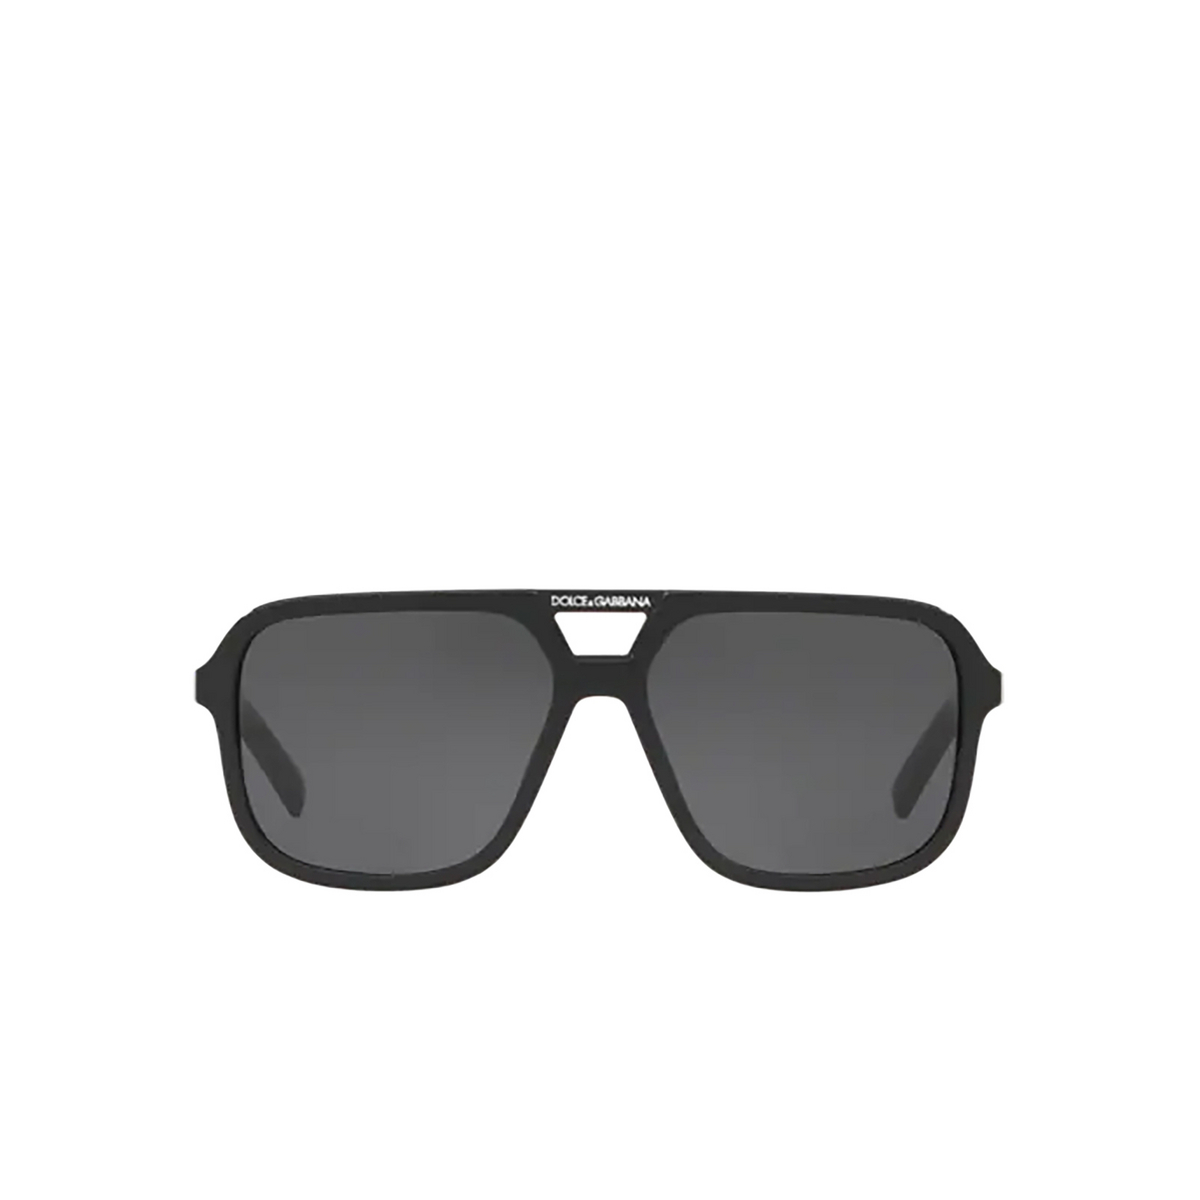 Dolce & Gabbana DG4354 Sunglasses 501/87 Black - front view